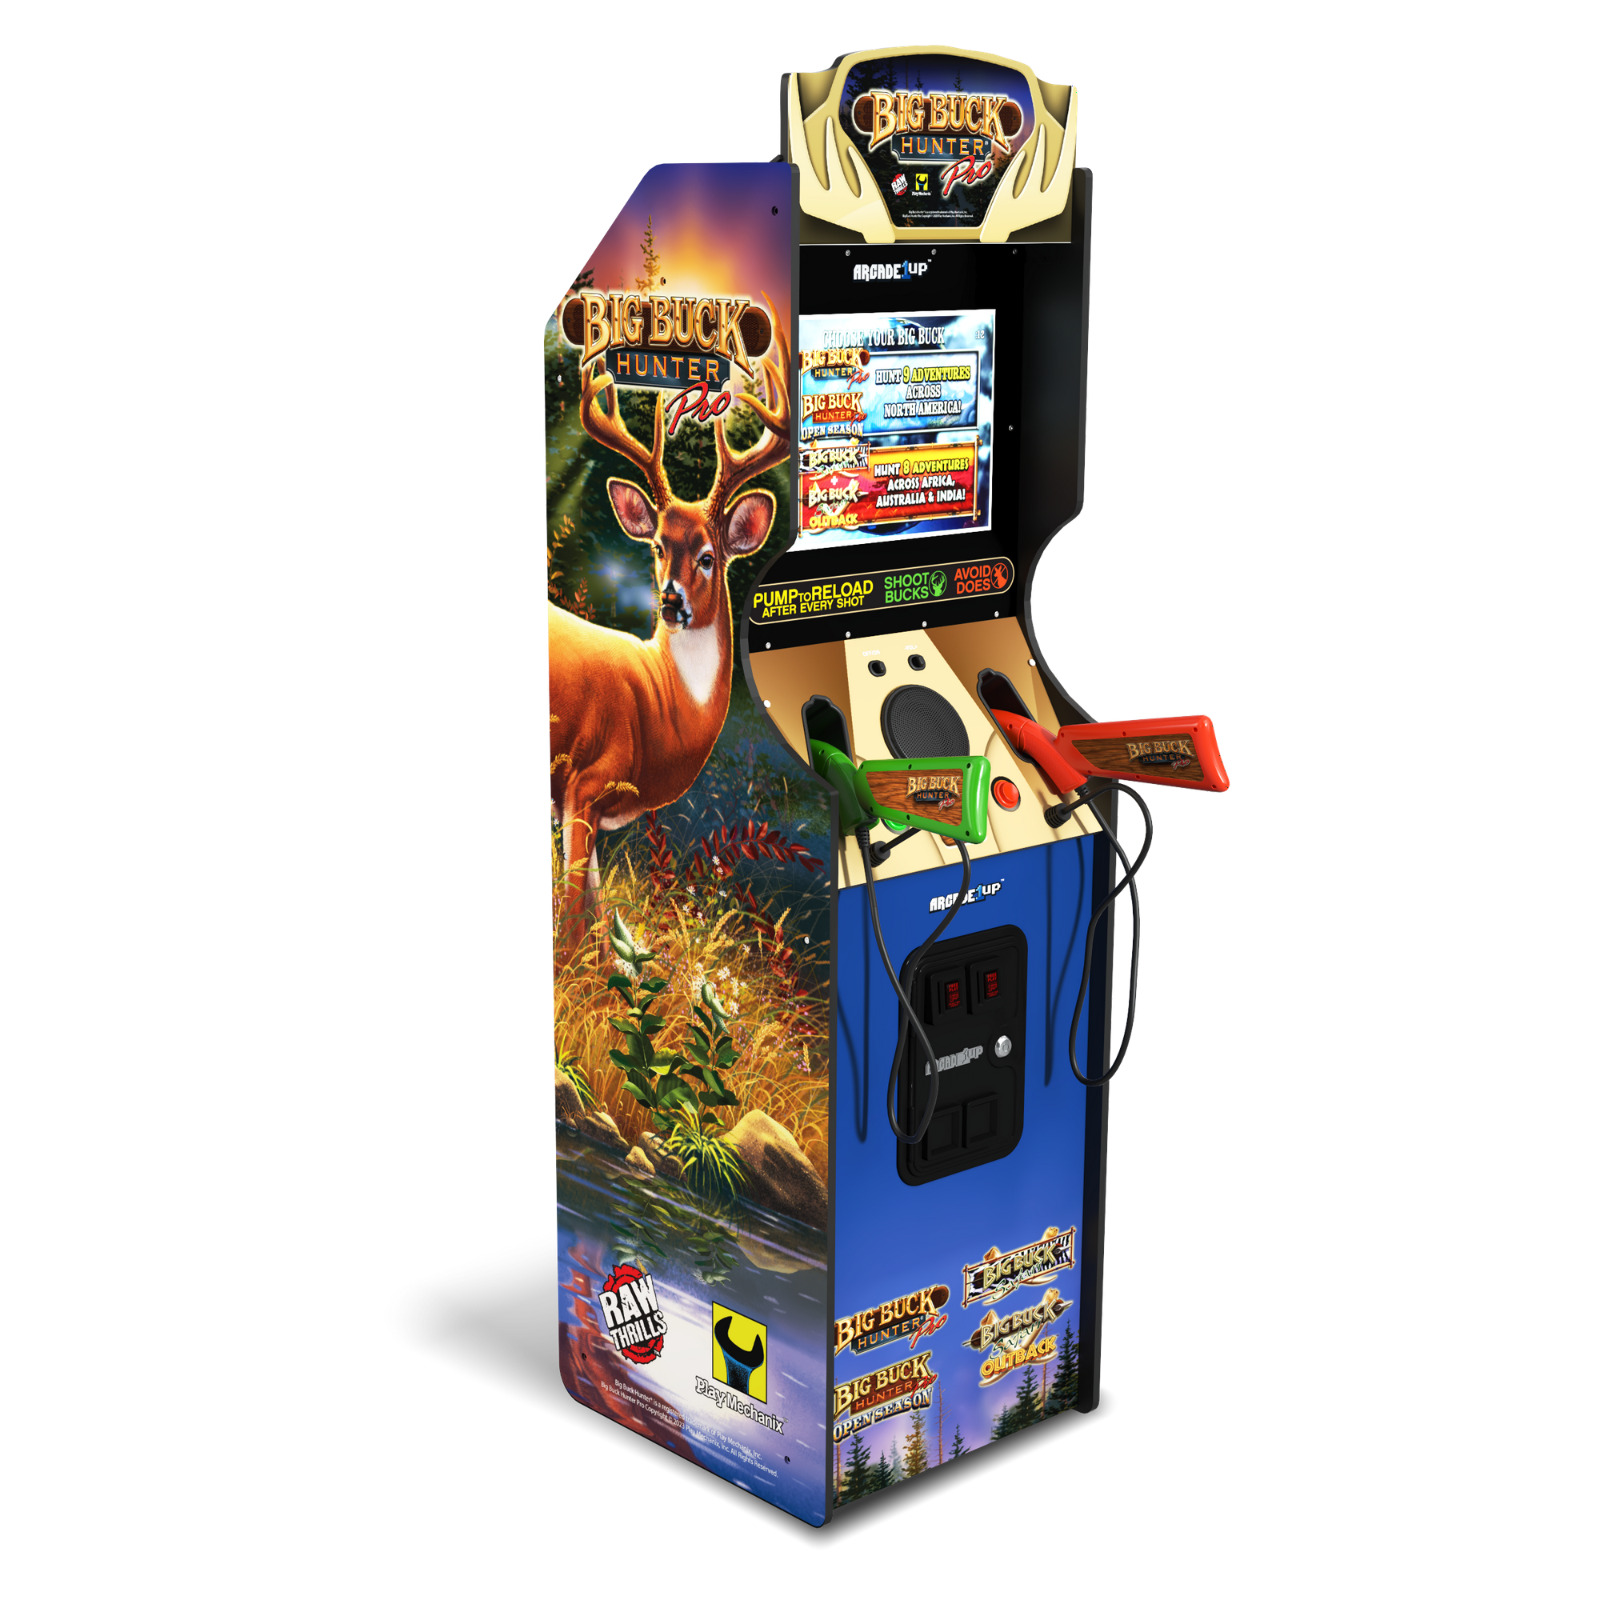 Arcade1Up Big Buck Hunter Pro Deluxe Arcade Machine Video Game Shooter 2 Player